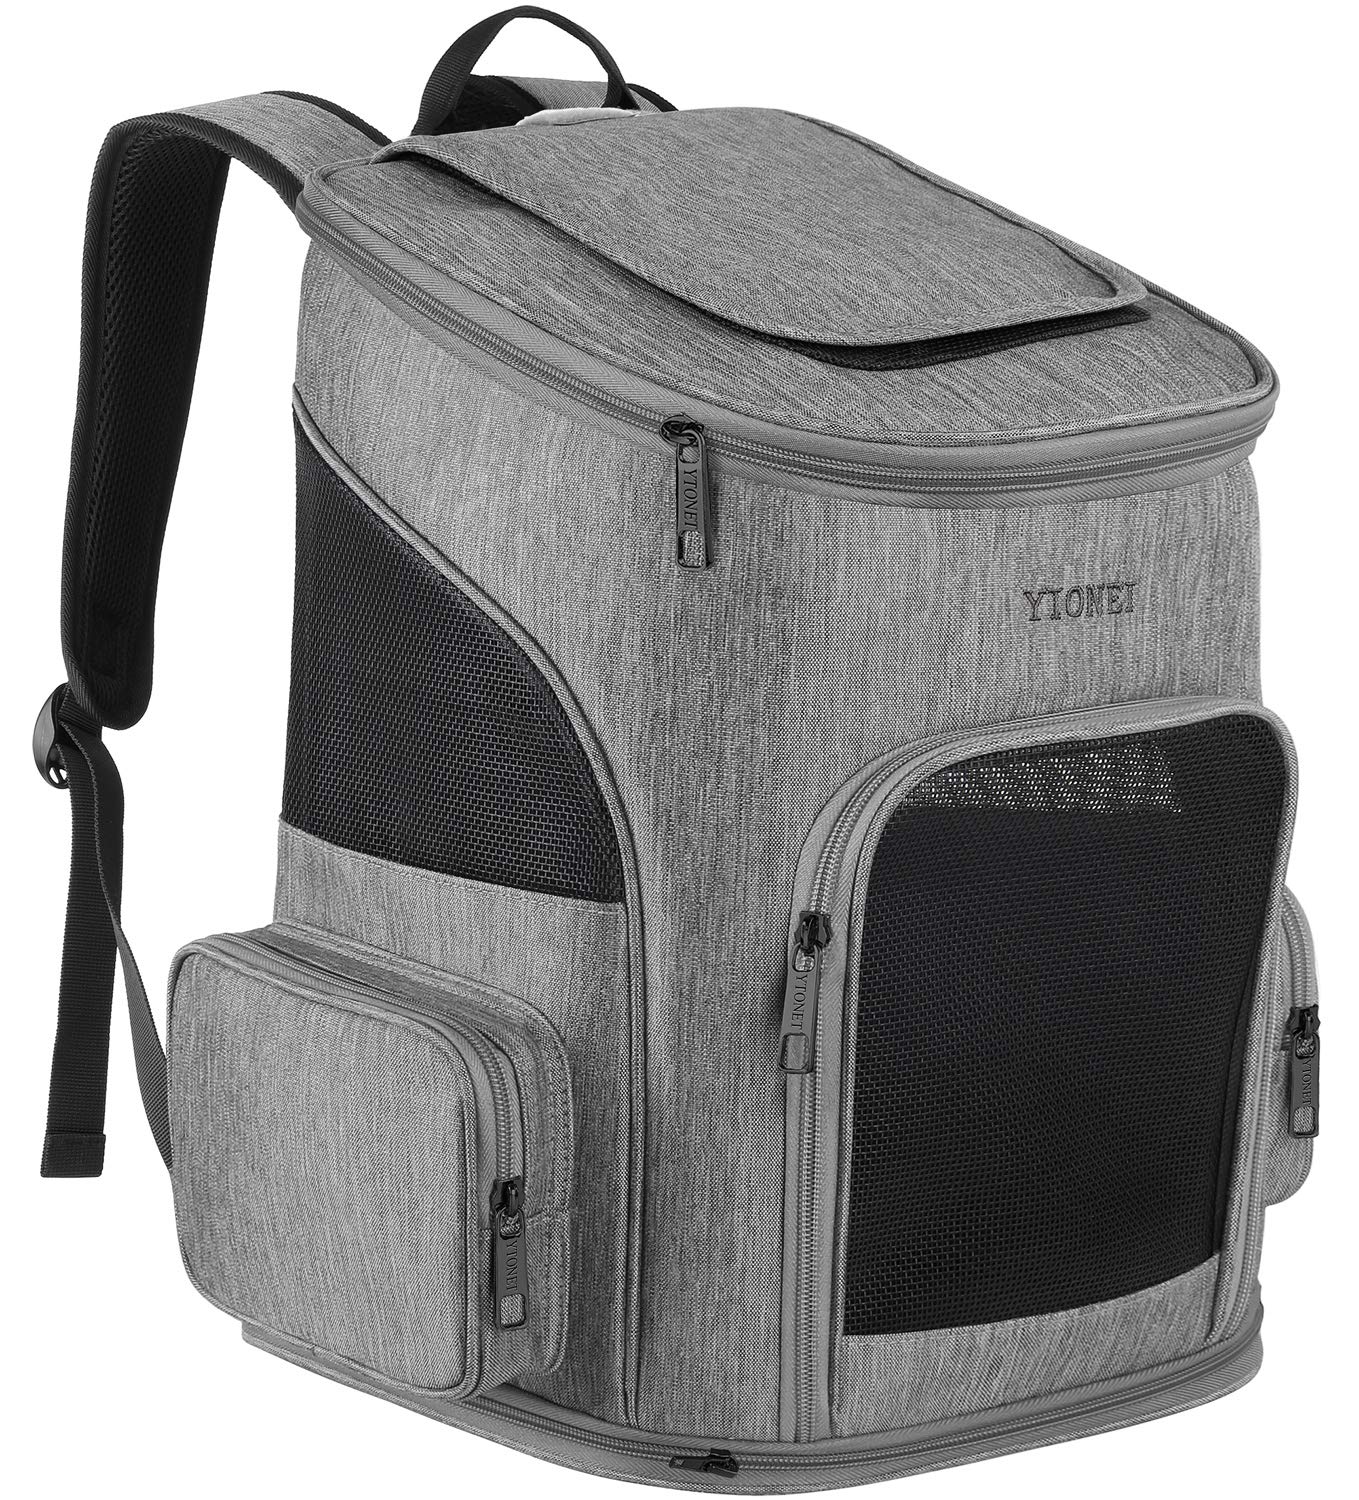 Ytonet Dog Backpack Pet Carrier